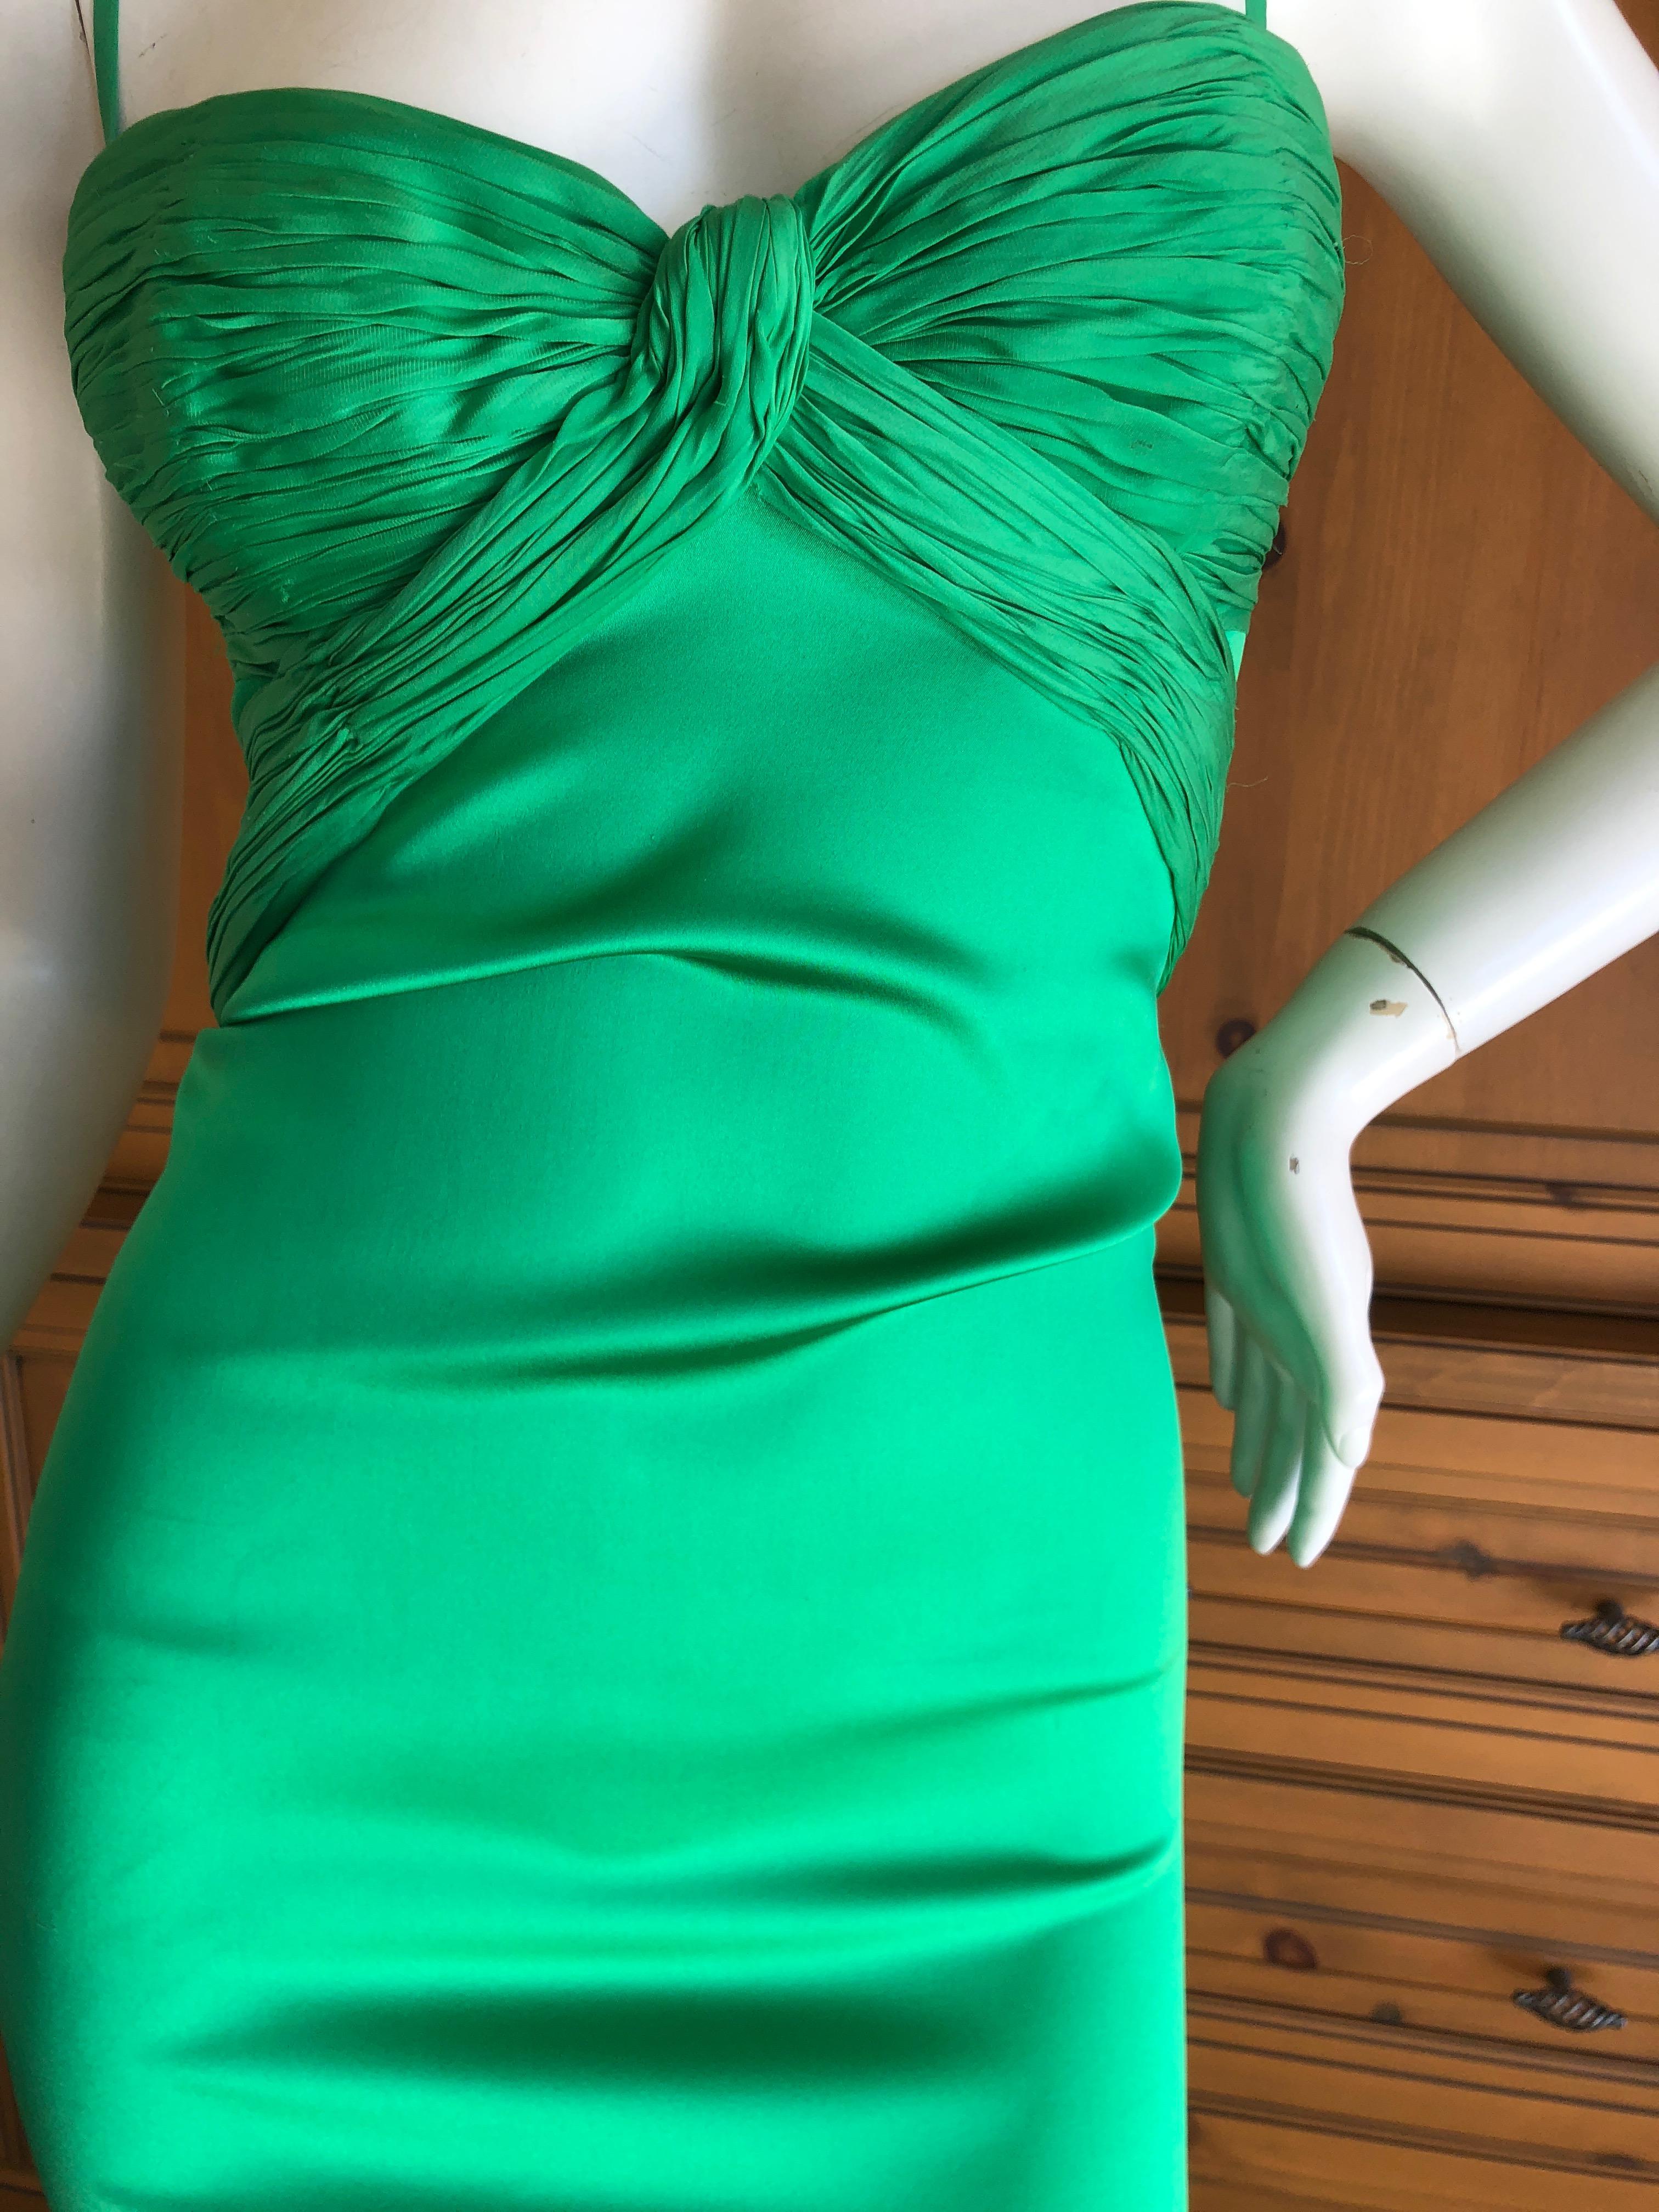 Roberto Cavalli Emerald Silk Micro Pleated Vintage Cocktail Dress
Size 40
 New Tags
Bust 34